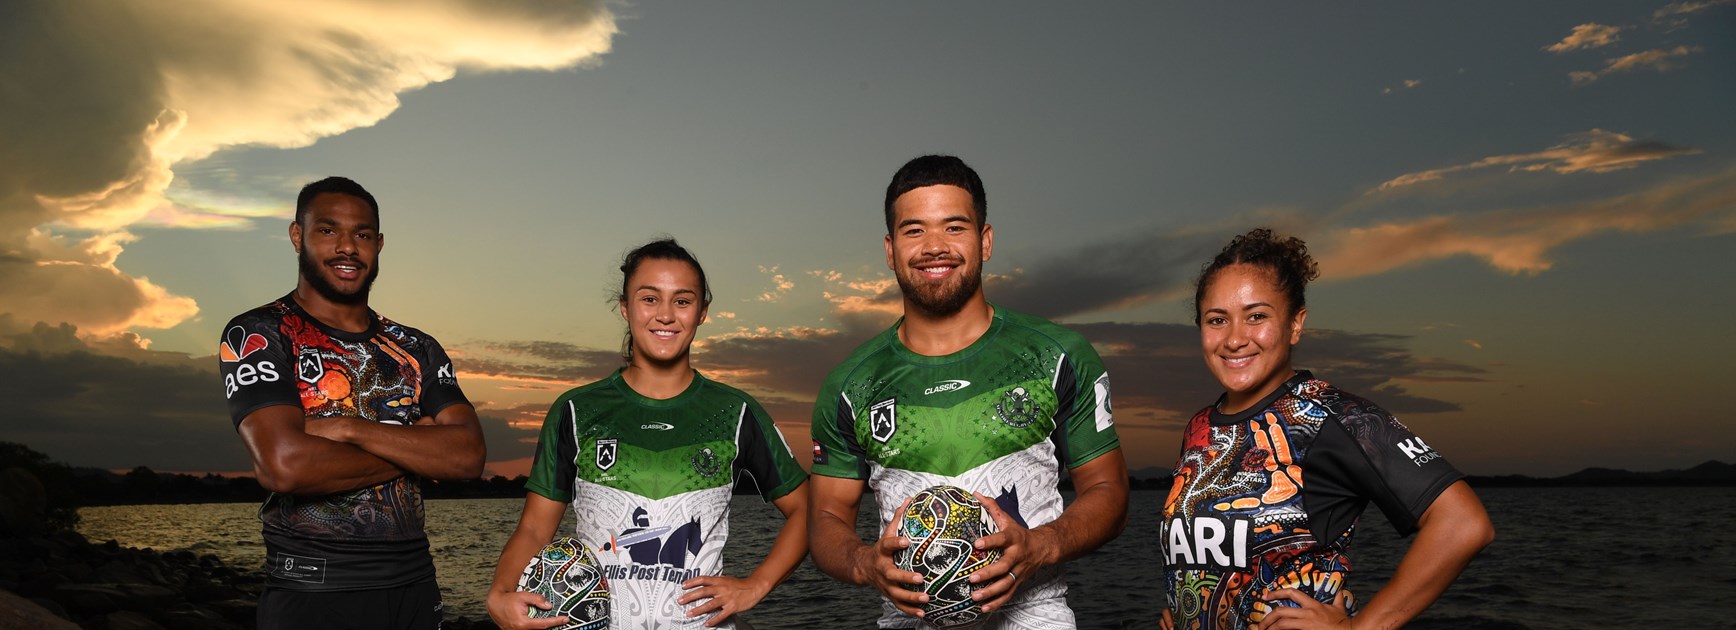 Townsville to host Indigenous v Maori All Stars